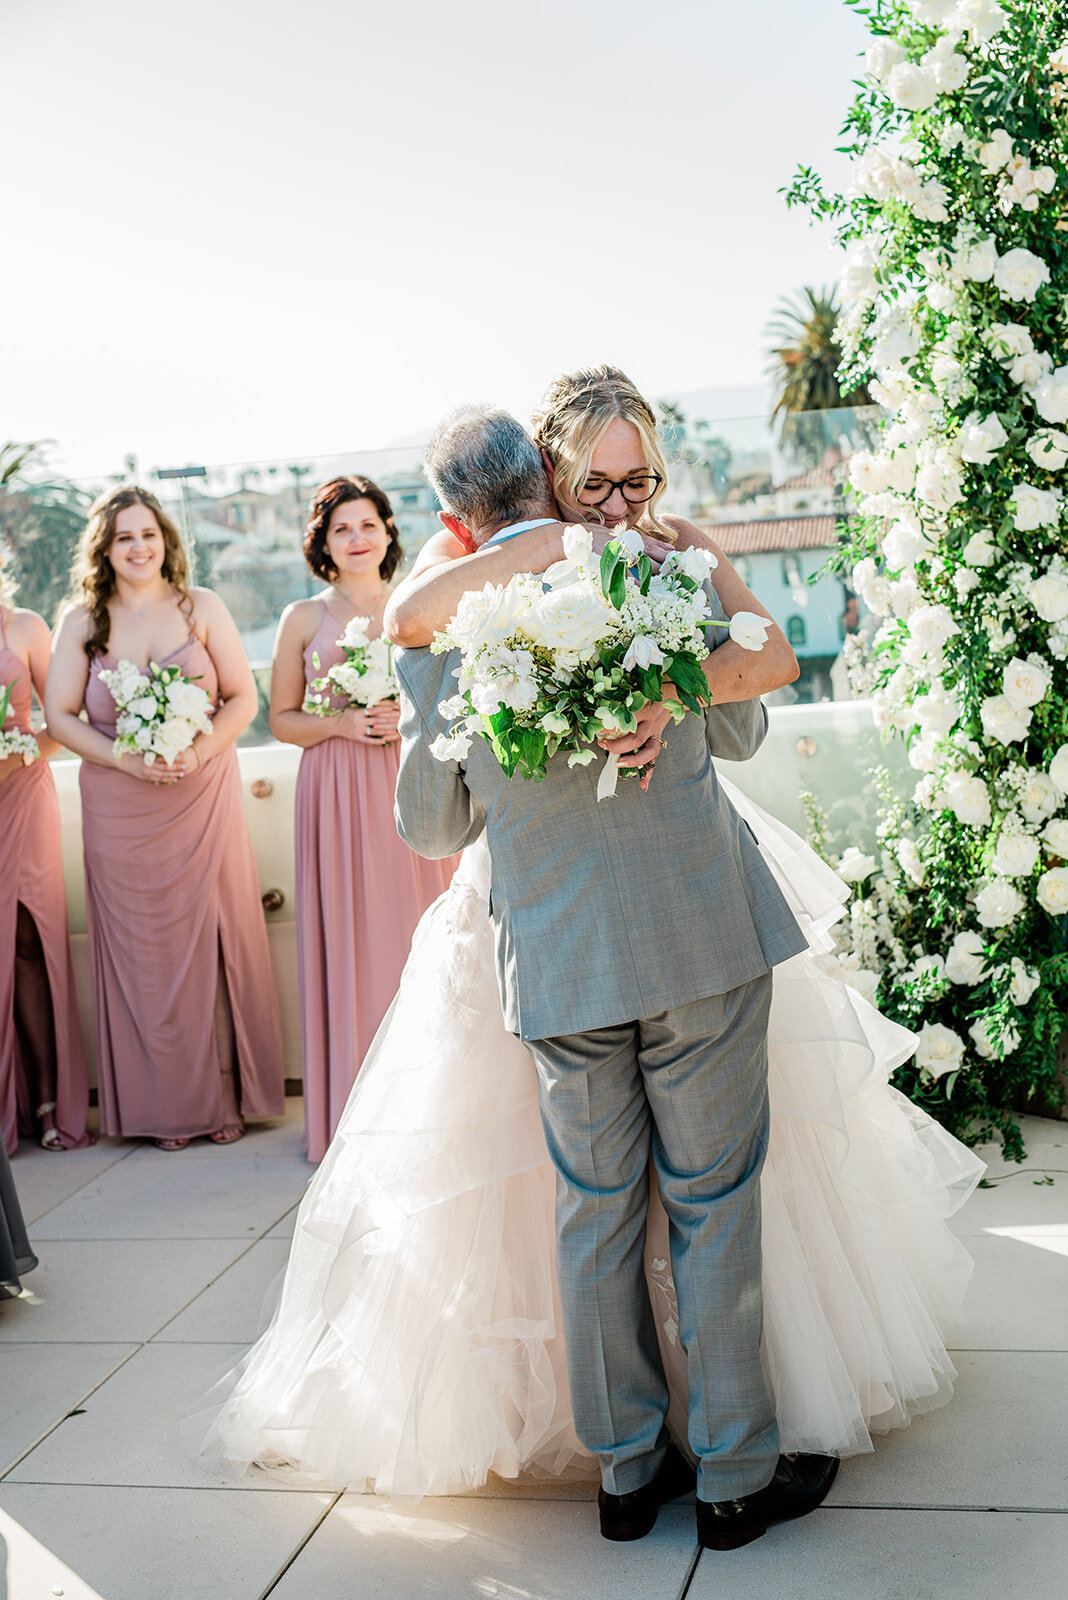 Romantic picture of Bride, hugging Groom during her luxury wedding in Santa Barbara, California